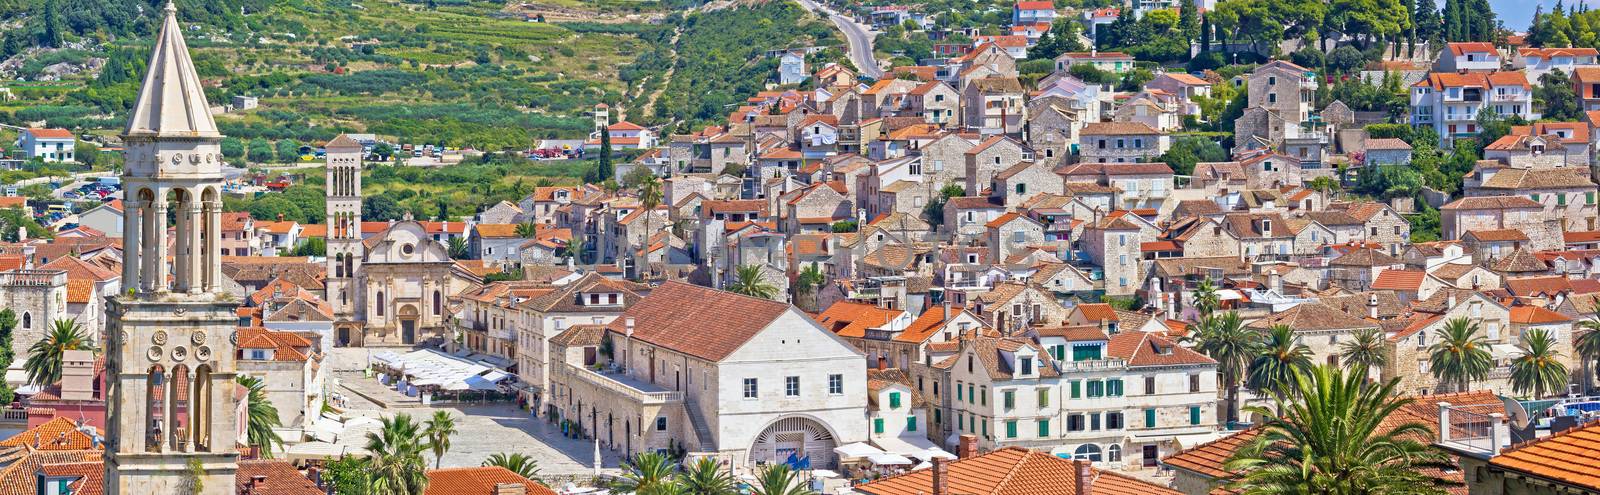 Old island town of Hvar architecture panoramic view, Dalmatia, Croatia